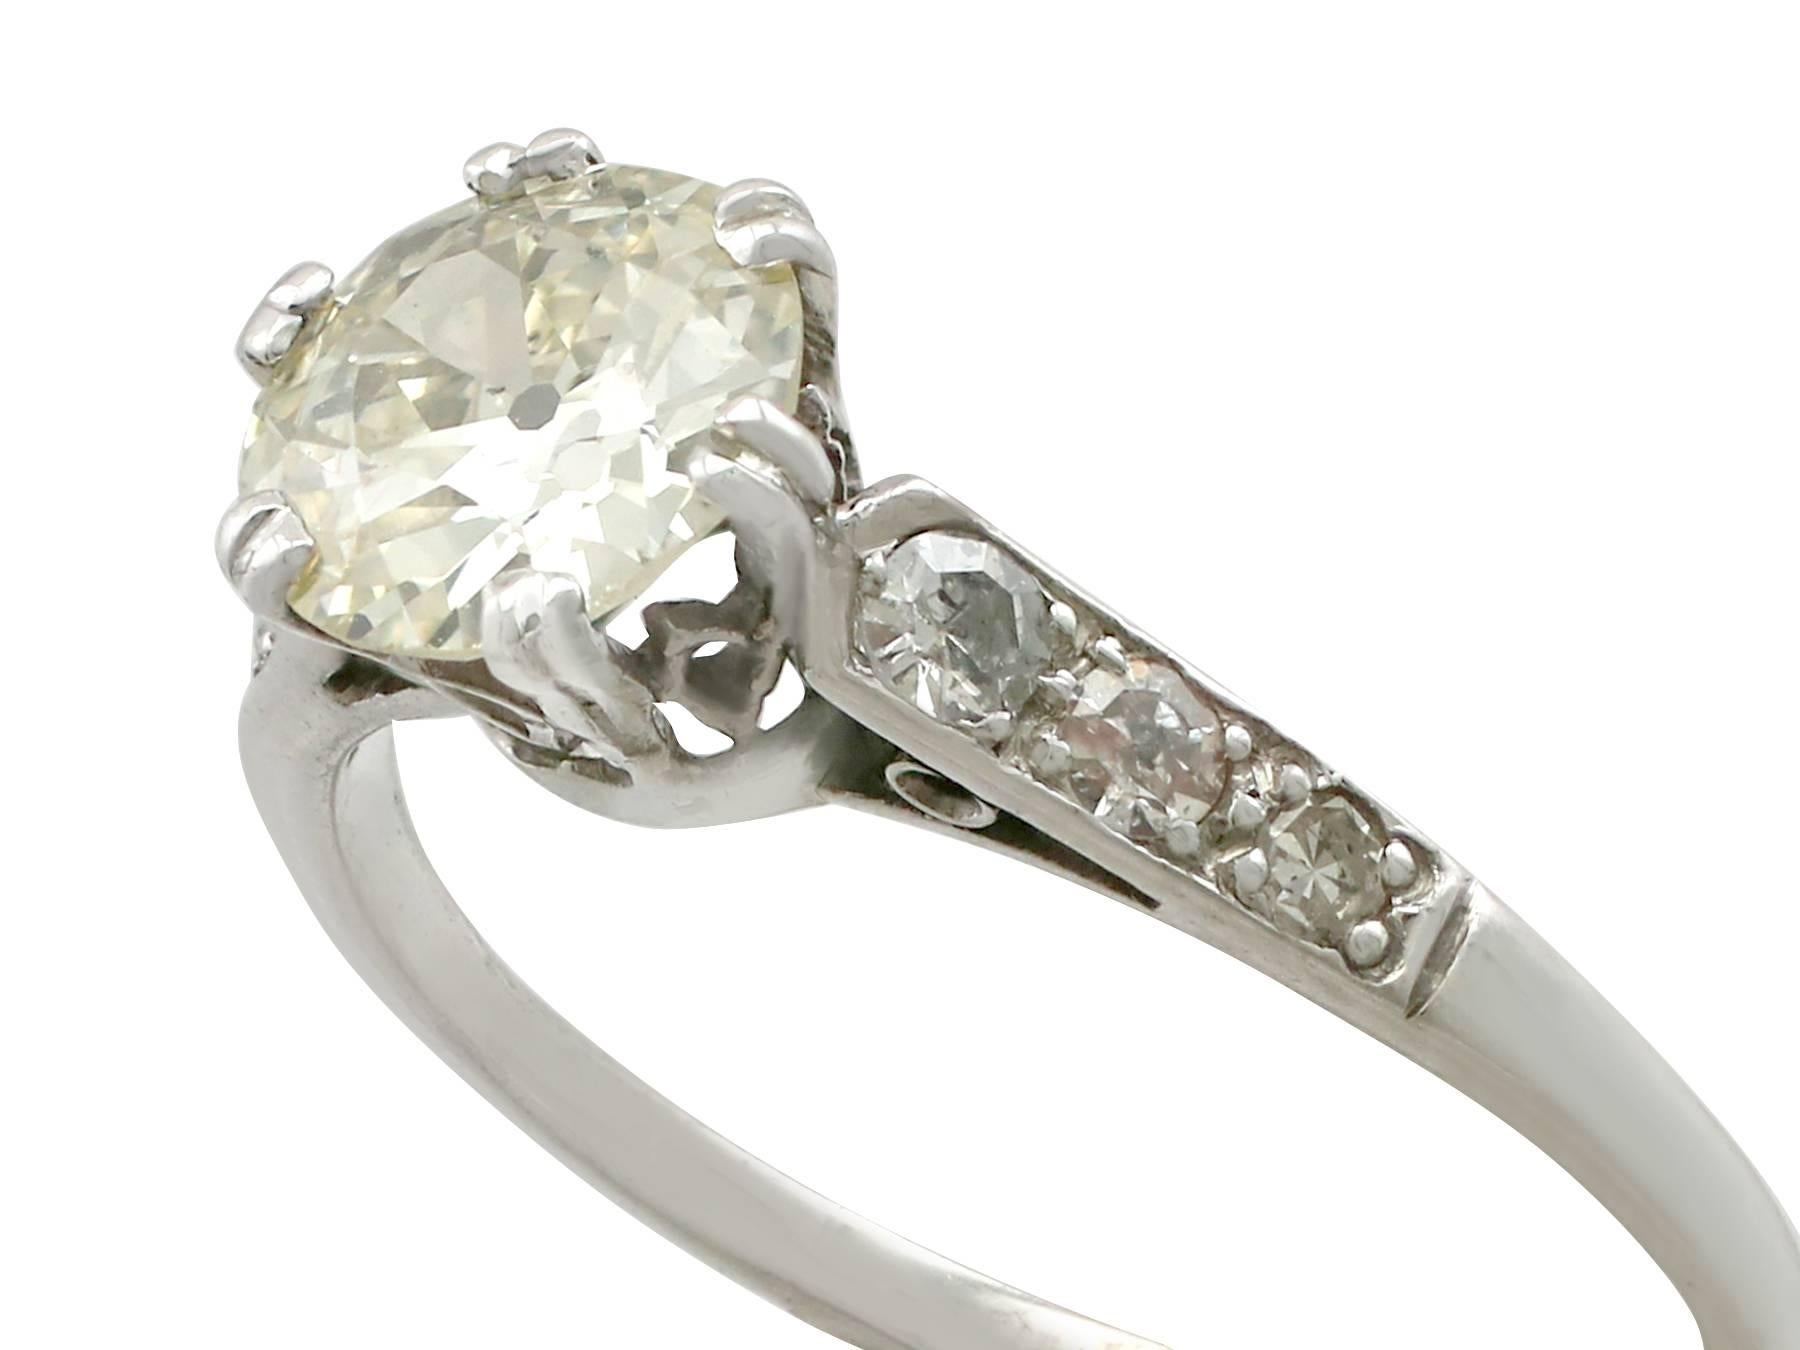 1.14 carat diamond ring